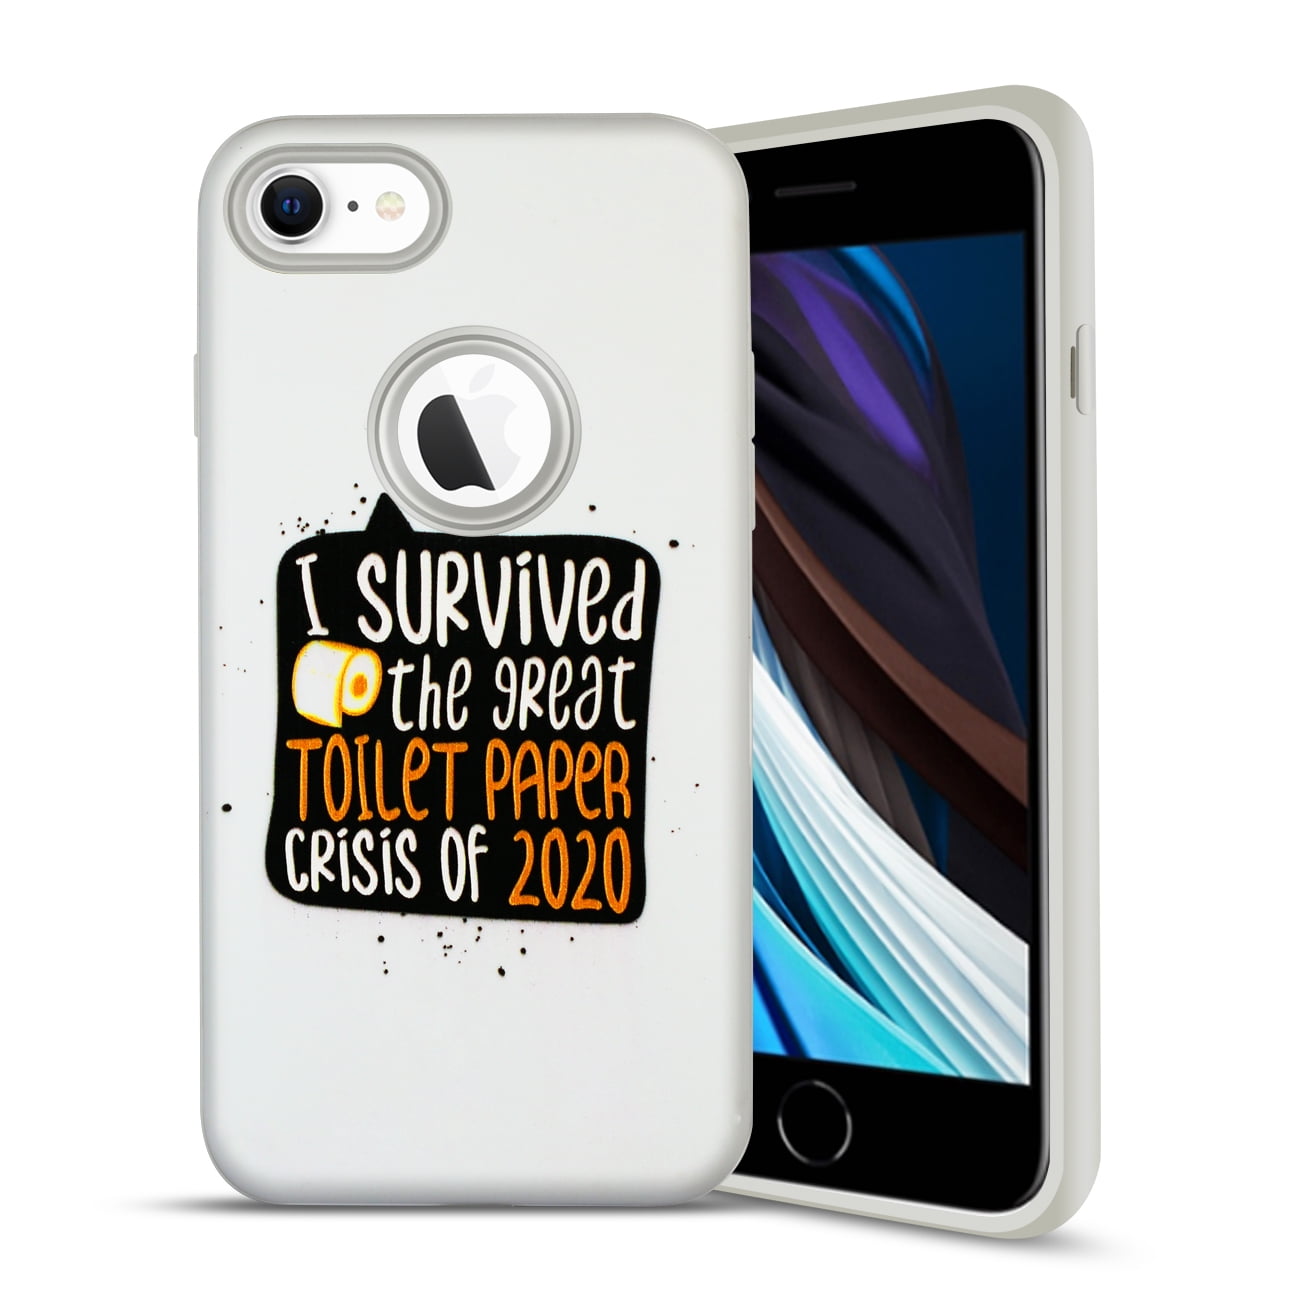 Swarovski Crystal High Smartphone Case iPhone® 13 Pro, Blue